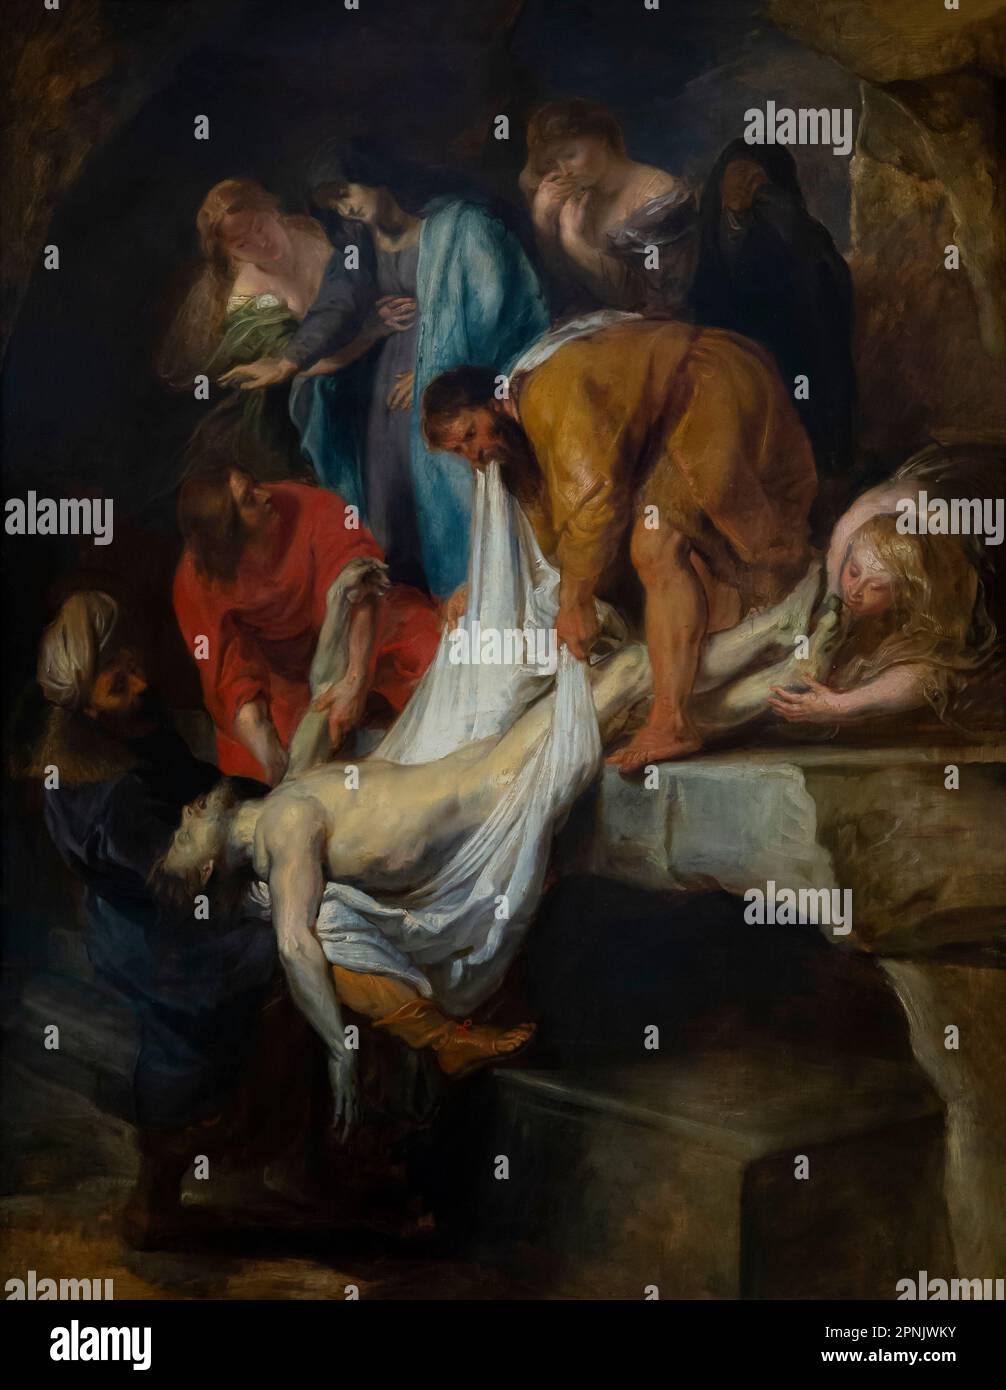 Abfahrt vom Kreuz, Peter Paul Rubens, 1615-1616, Courtauld Gallery, London, England, Großbritannien Stockfoto